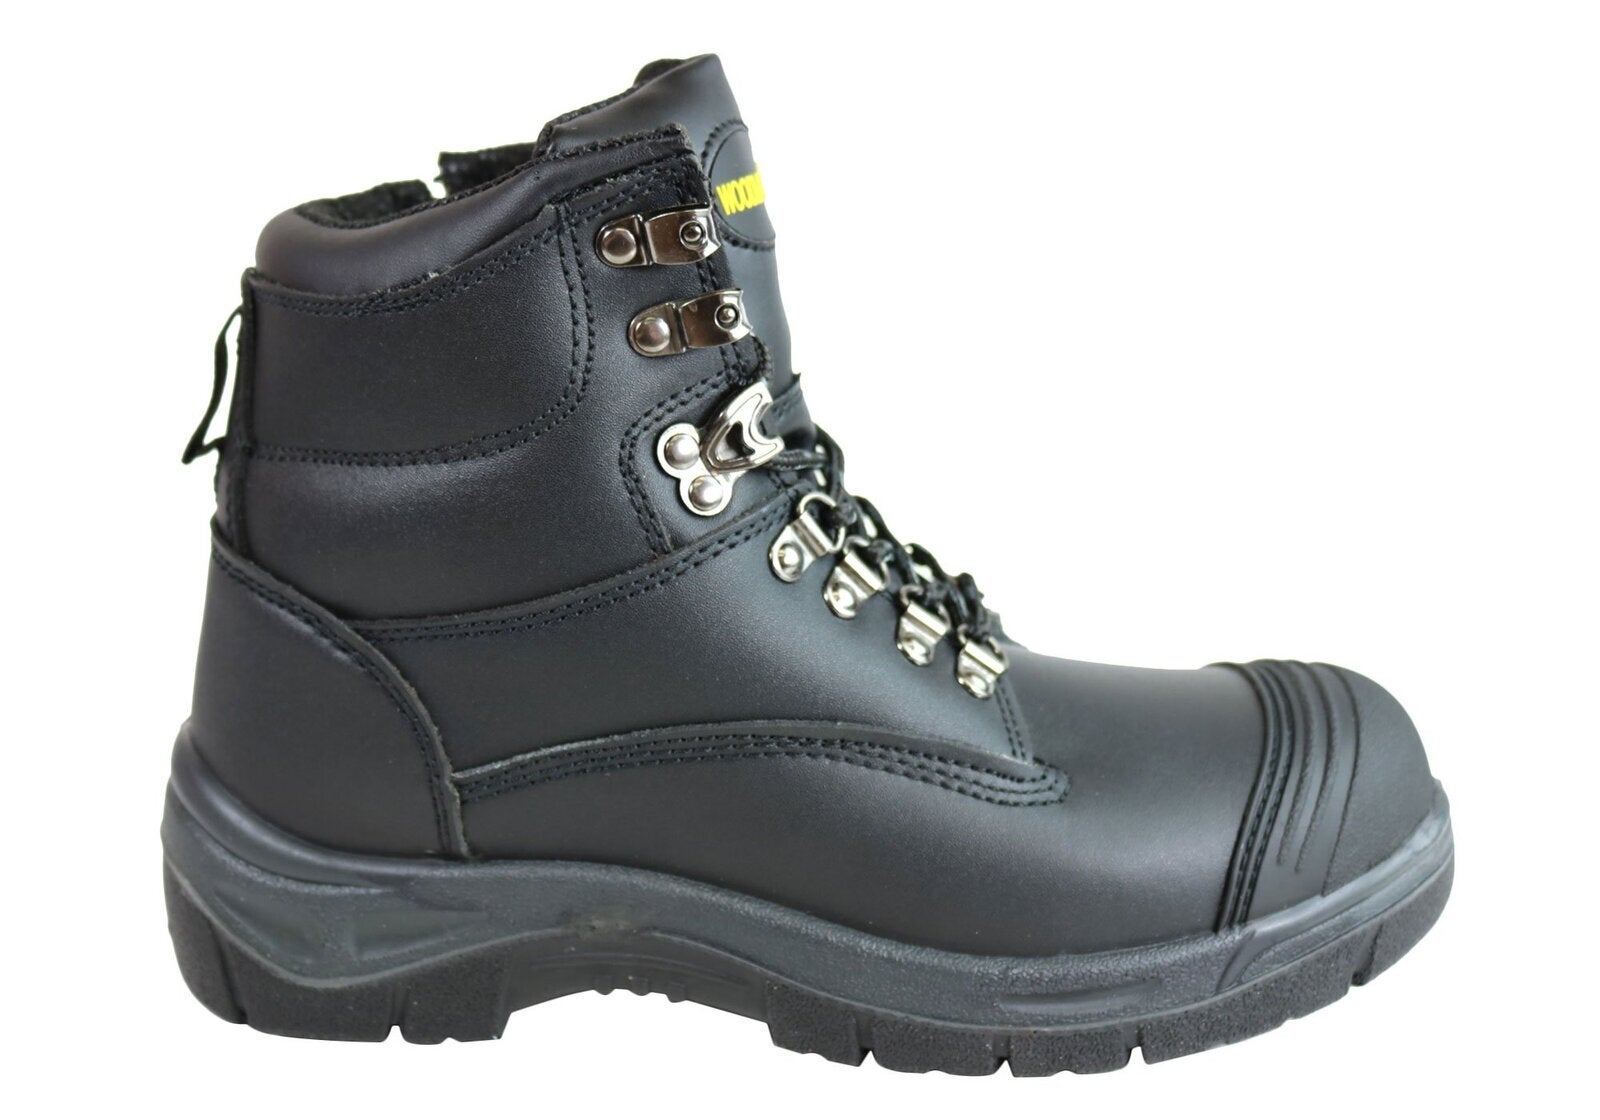 WOODLANDS Darwin Steel Cap Toe Safety BOOTS Side Zip Original Work Trade Shoes